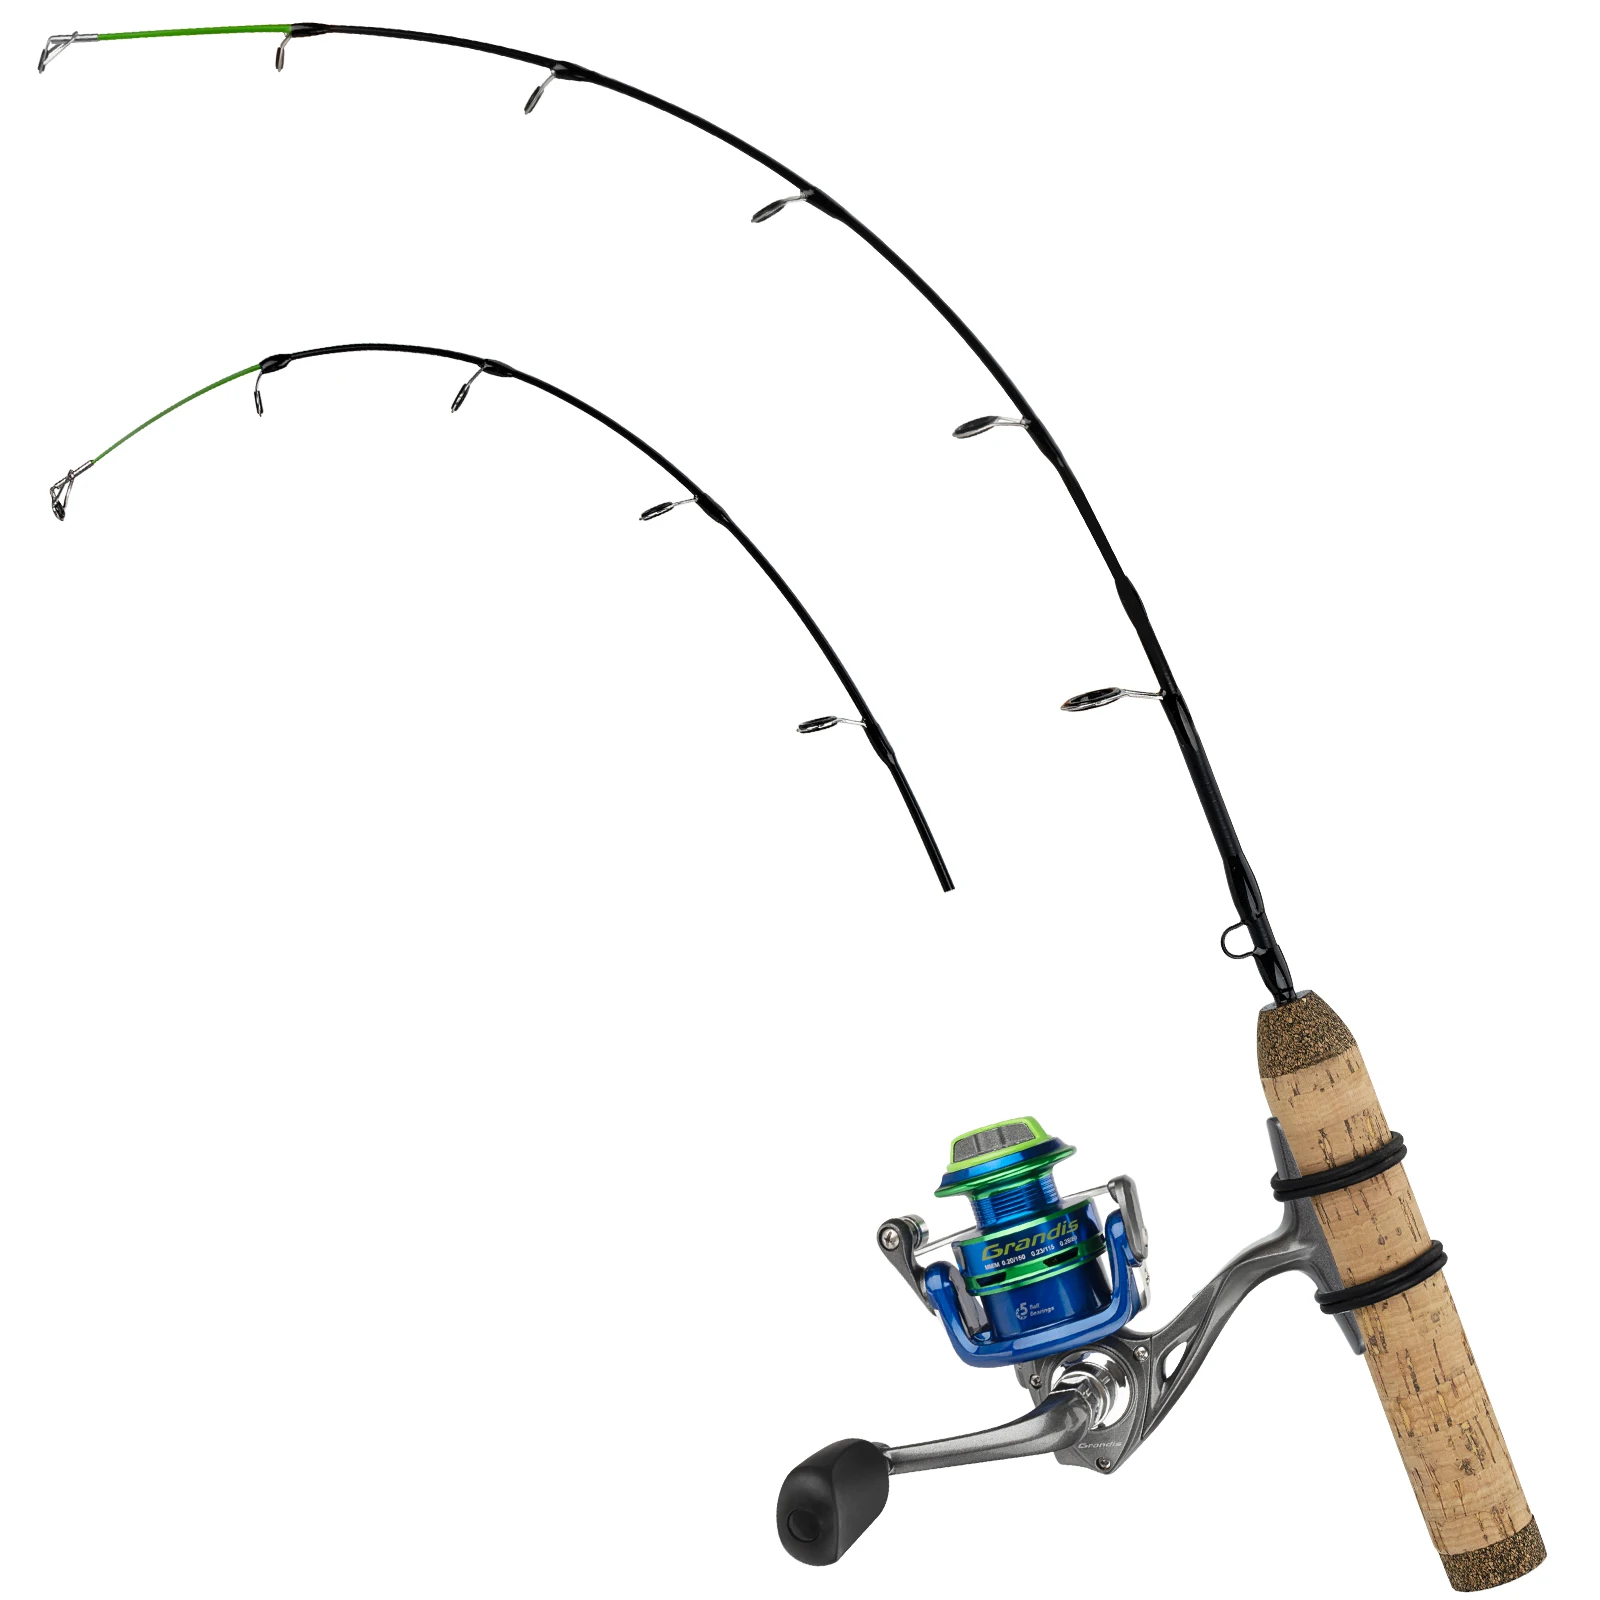 https://ae01.alicdn.com/kf/Sc409b1252423406caa3361d034d0d544K/Thkfish-Ice-Fishing-Rod-Reel-Combos-Set-67cm-Ultra-Light-Carbon-Fiber-Fishing-Pole-Winter-Fishing.jpg